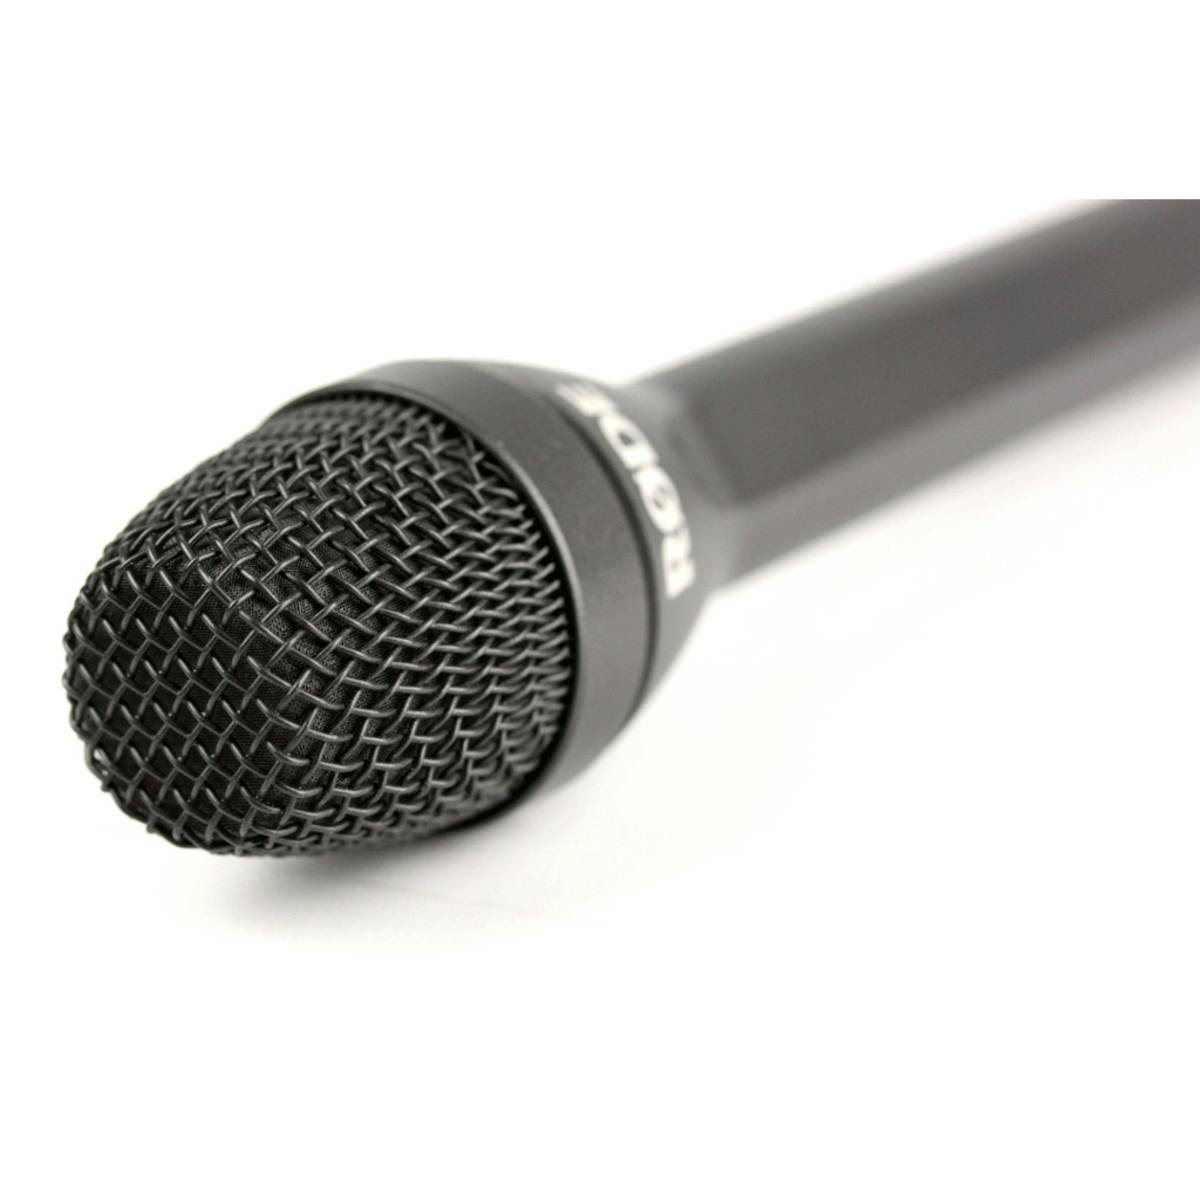 Rode Reporter - handheld XLR microphone